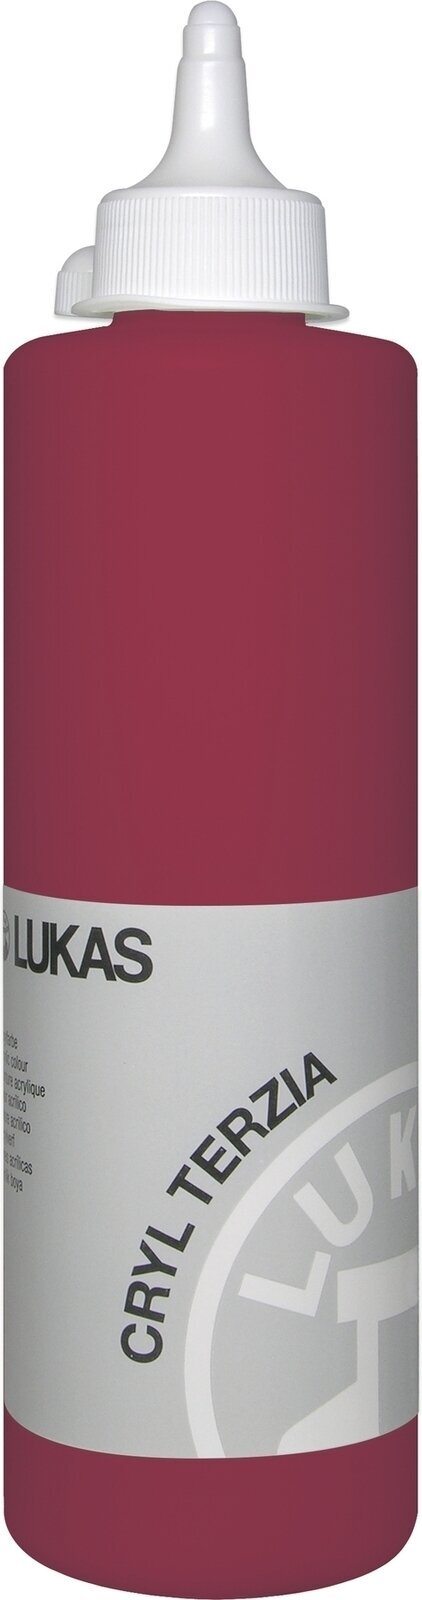 Acrylic Paint Lukas Cryl Terzia Acrylic Paint Plastic Bottle Acrylic Paint Alizarin Crimson 500 ml 1 pc